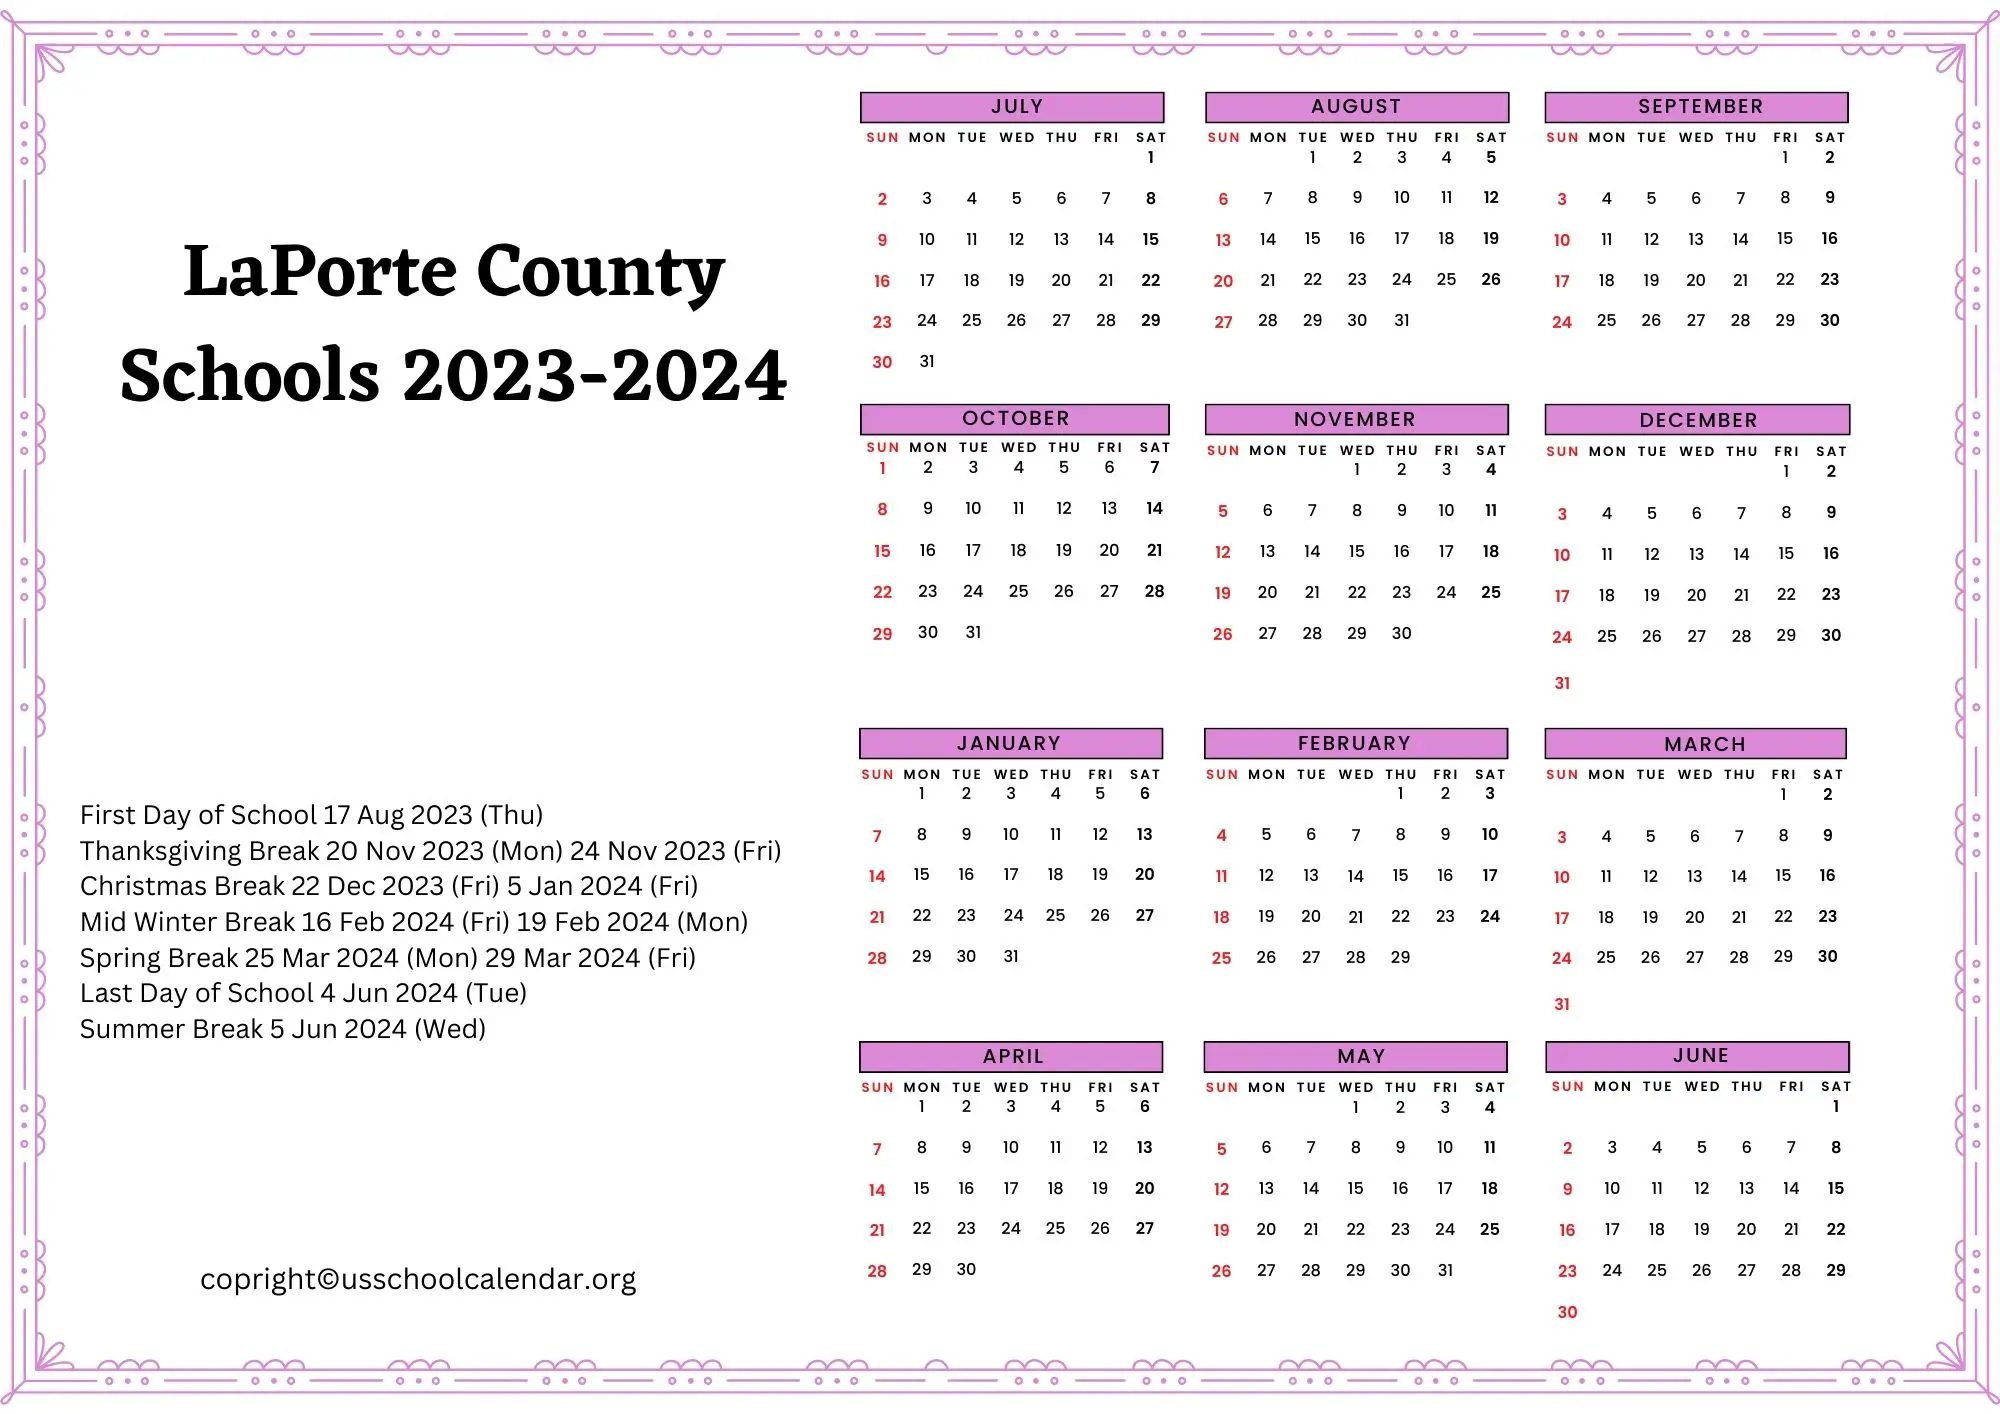 laporte-county-schools-calendar-with-holidays-2023-2024